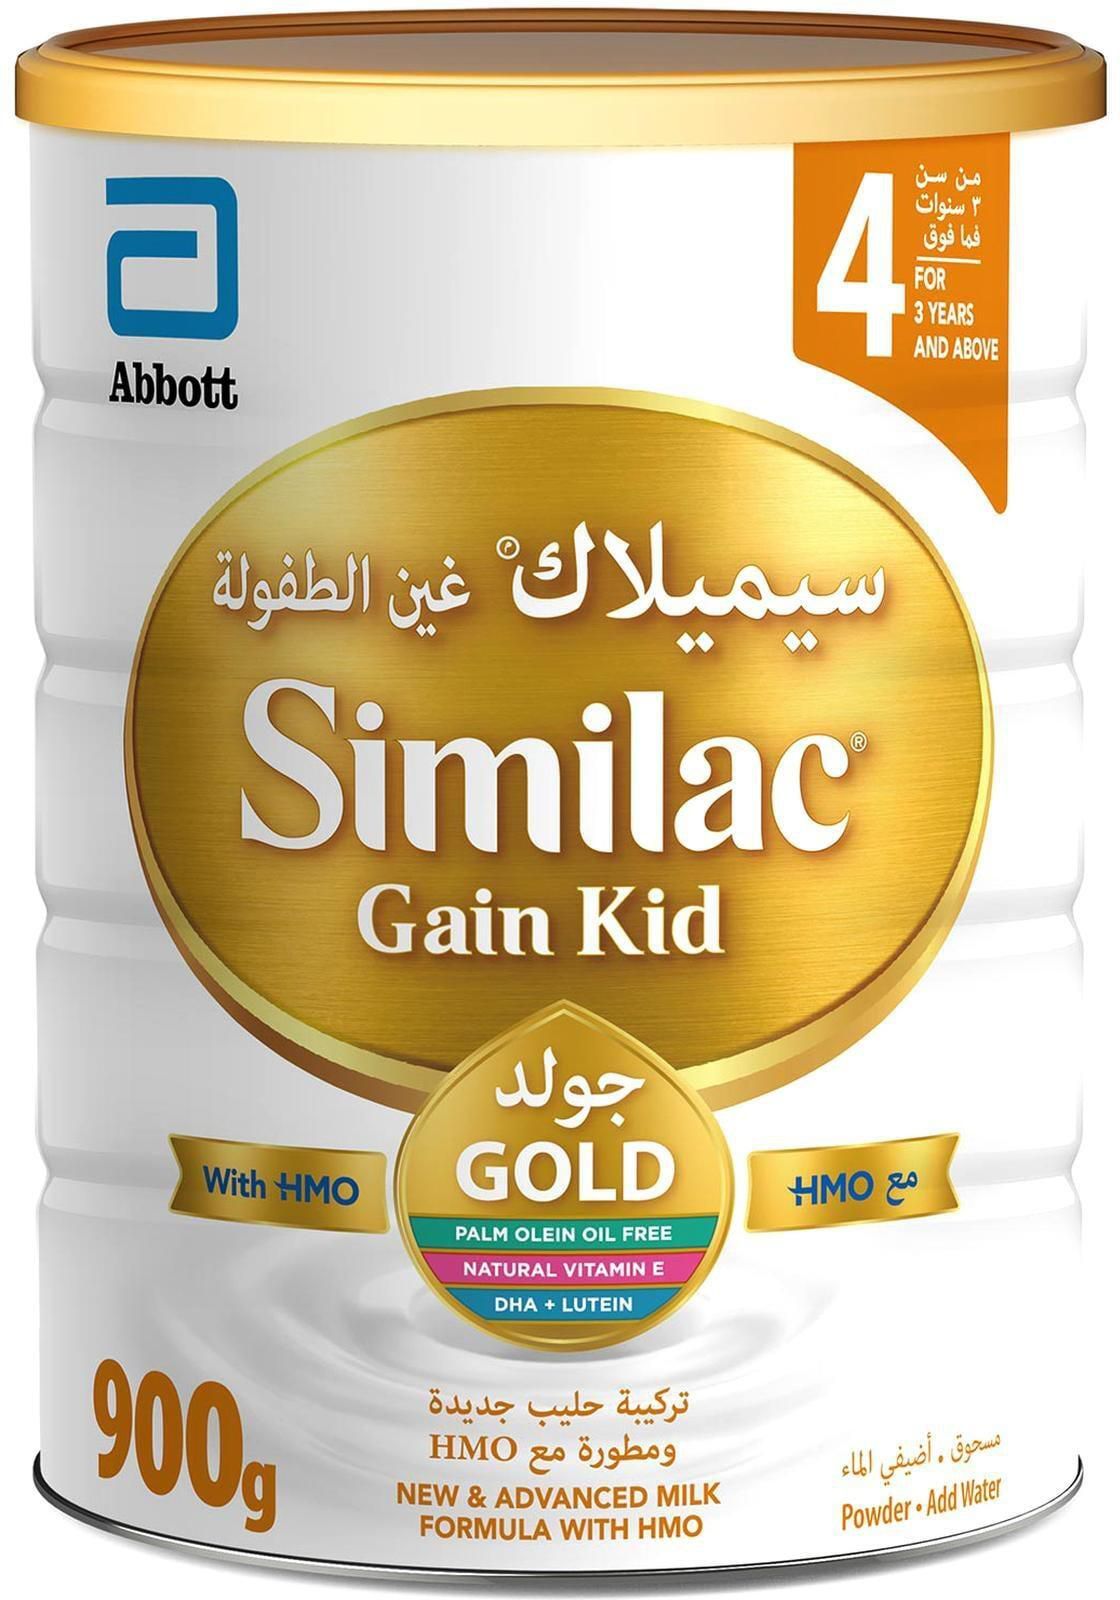 Abbott Similac Gain Kid Gold HMO Stage 4 Growing Up Formula Milk Powder 900g